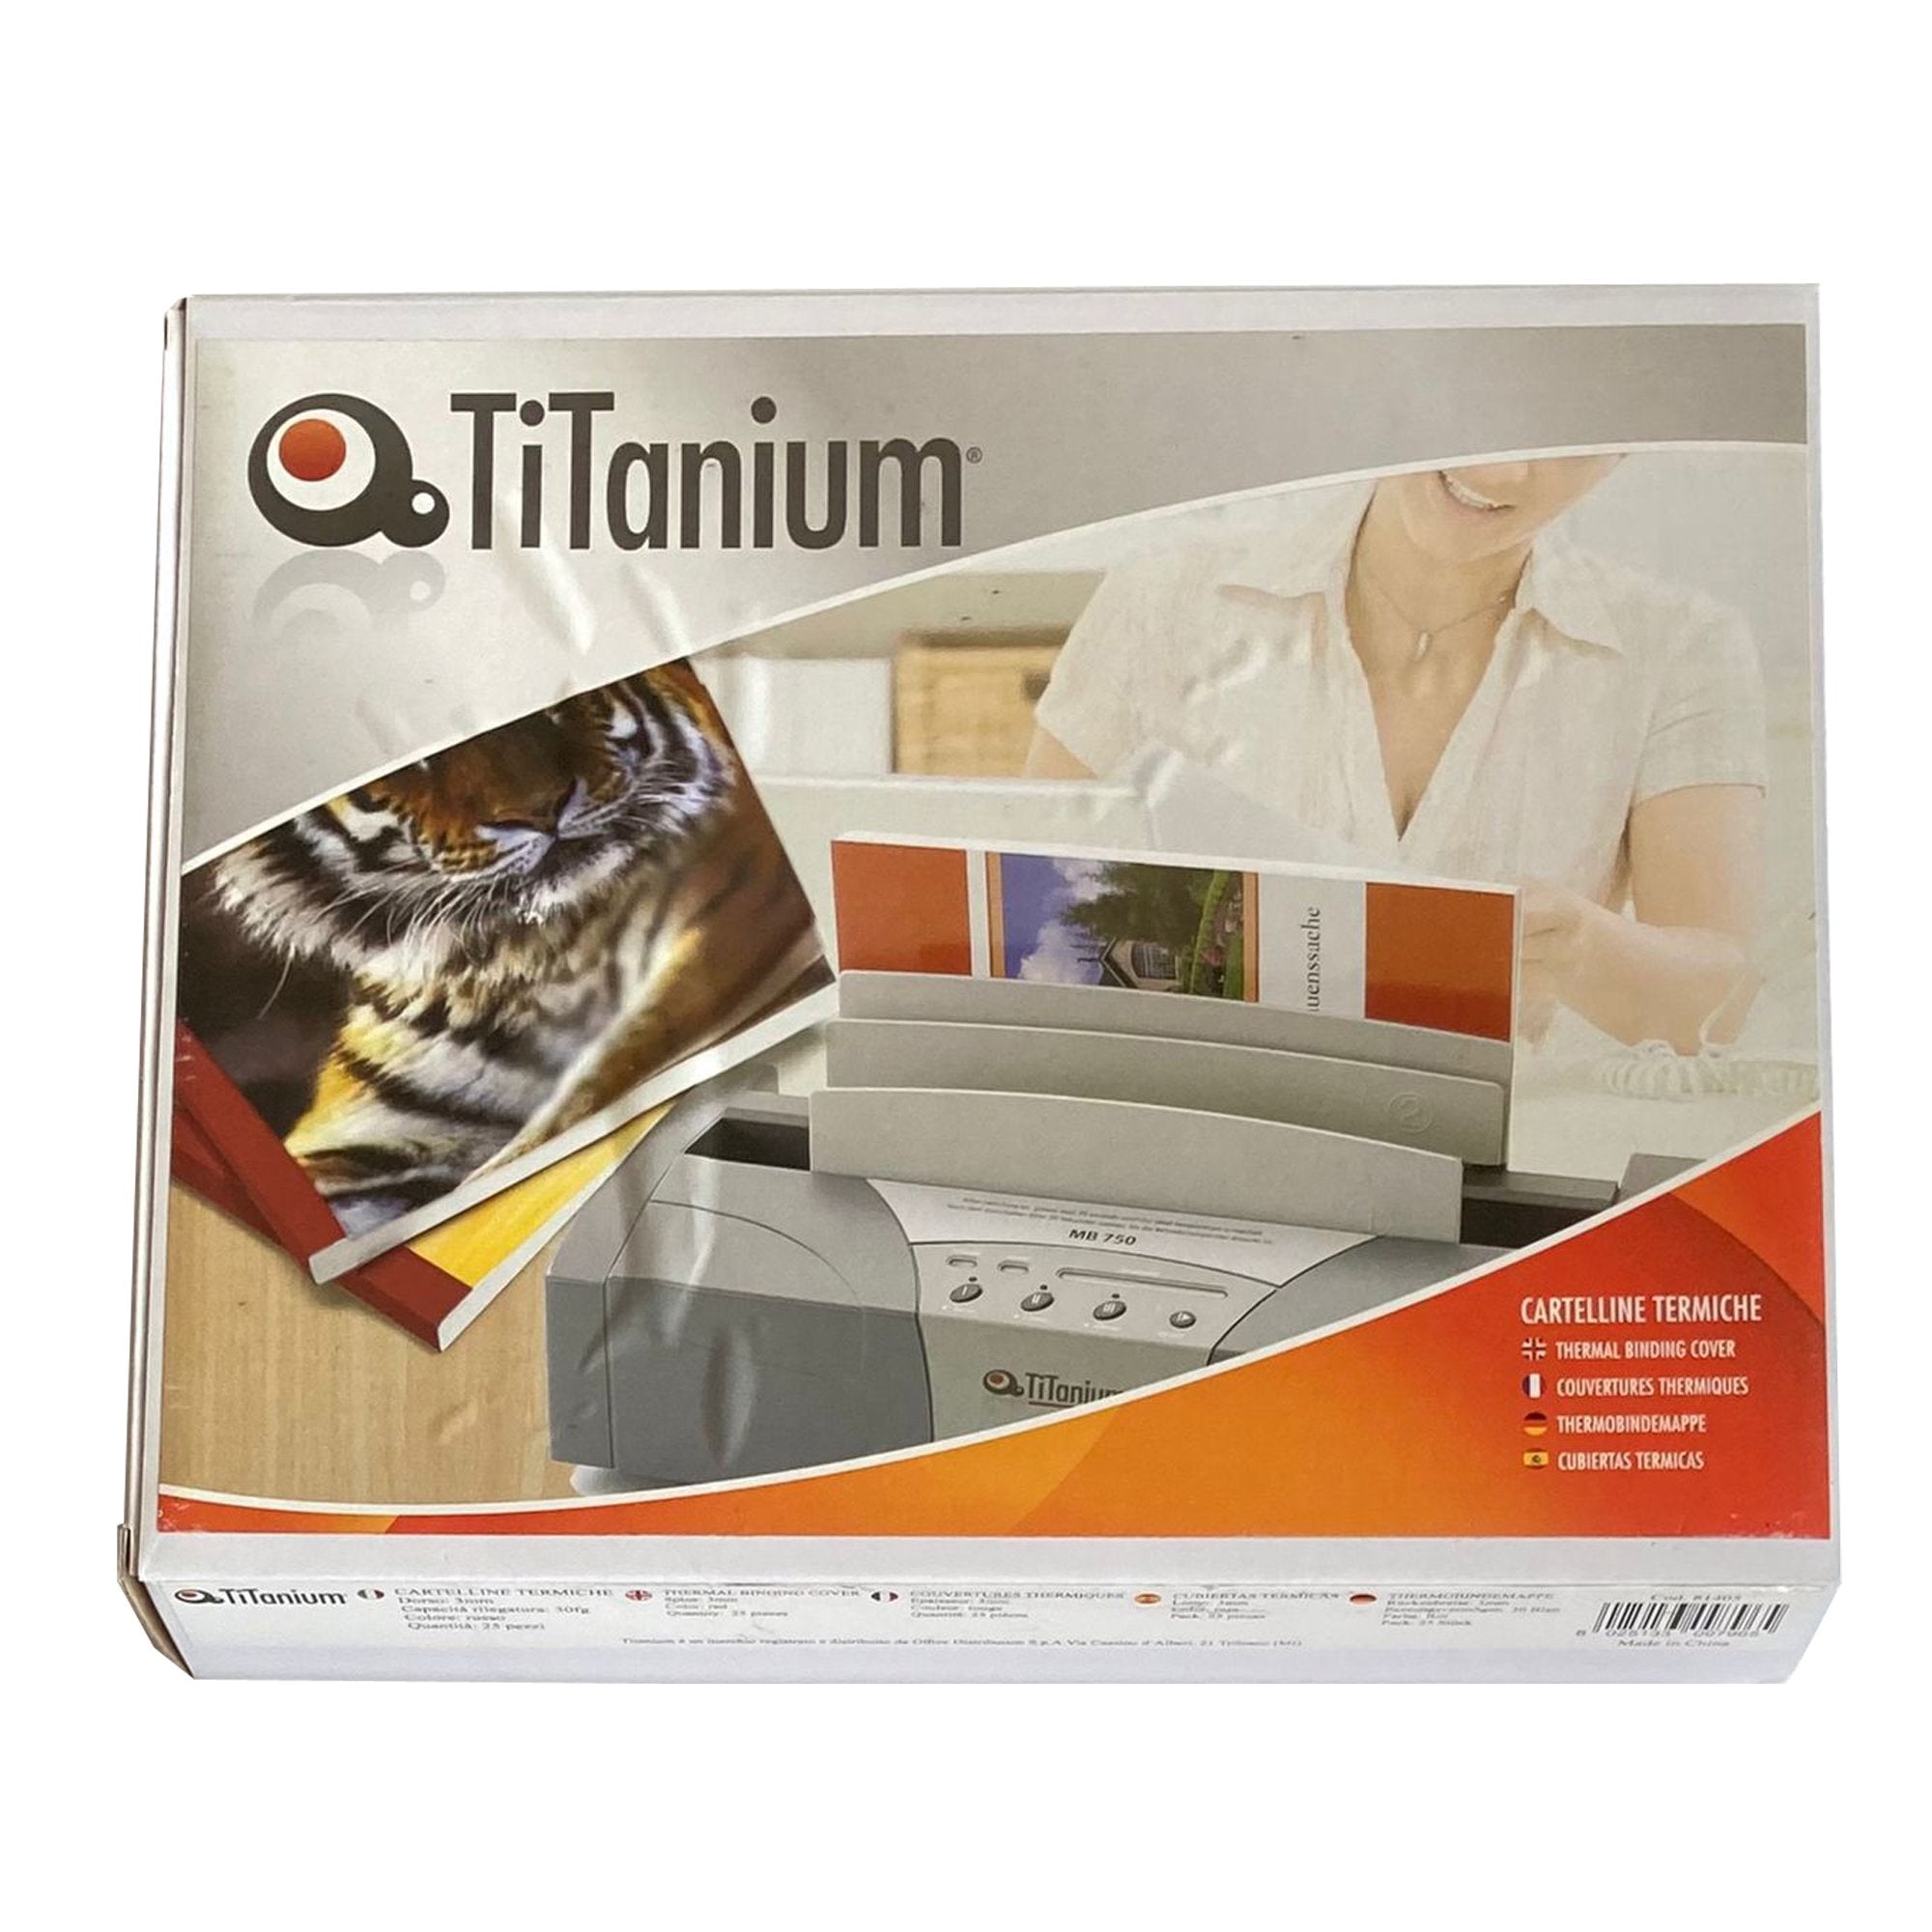 titanium-25-cartelline-termiche-1-5mm-rosso-grain